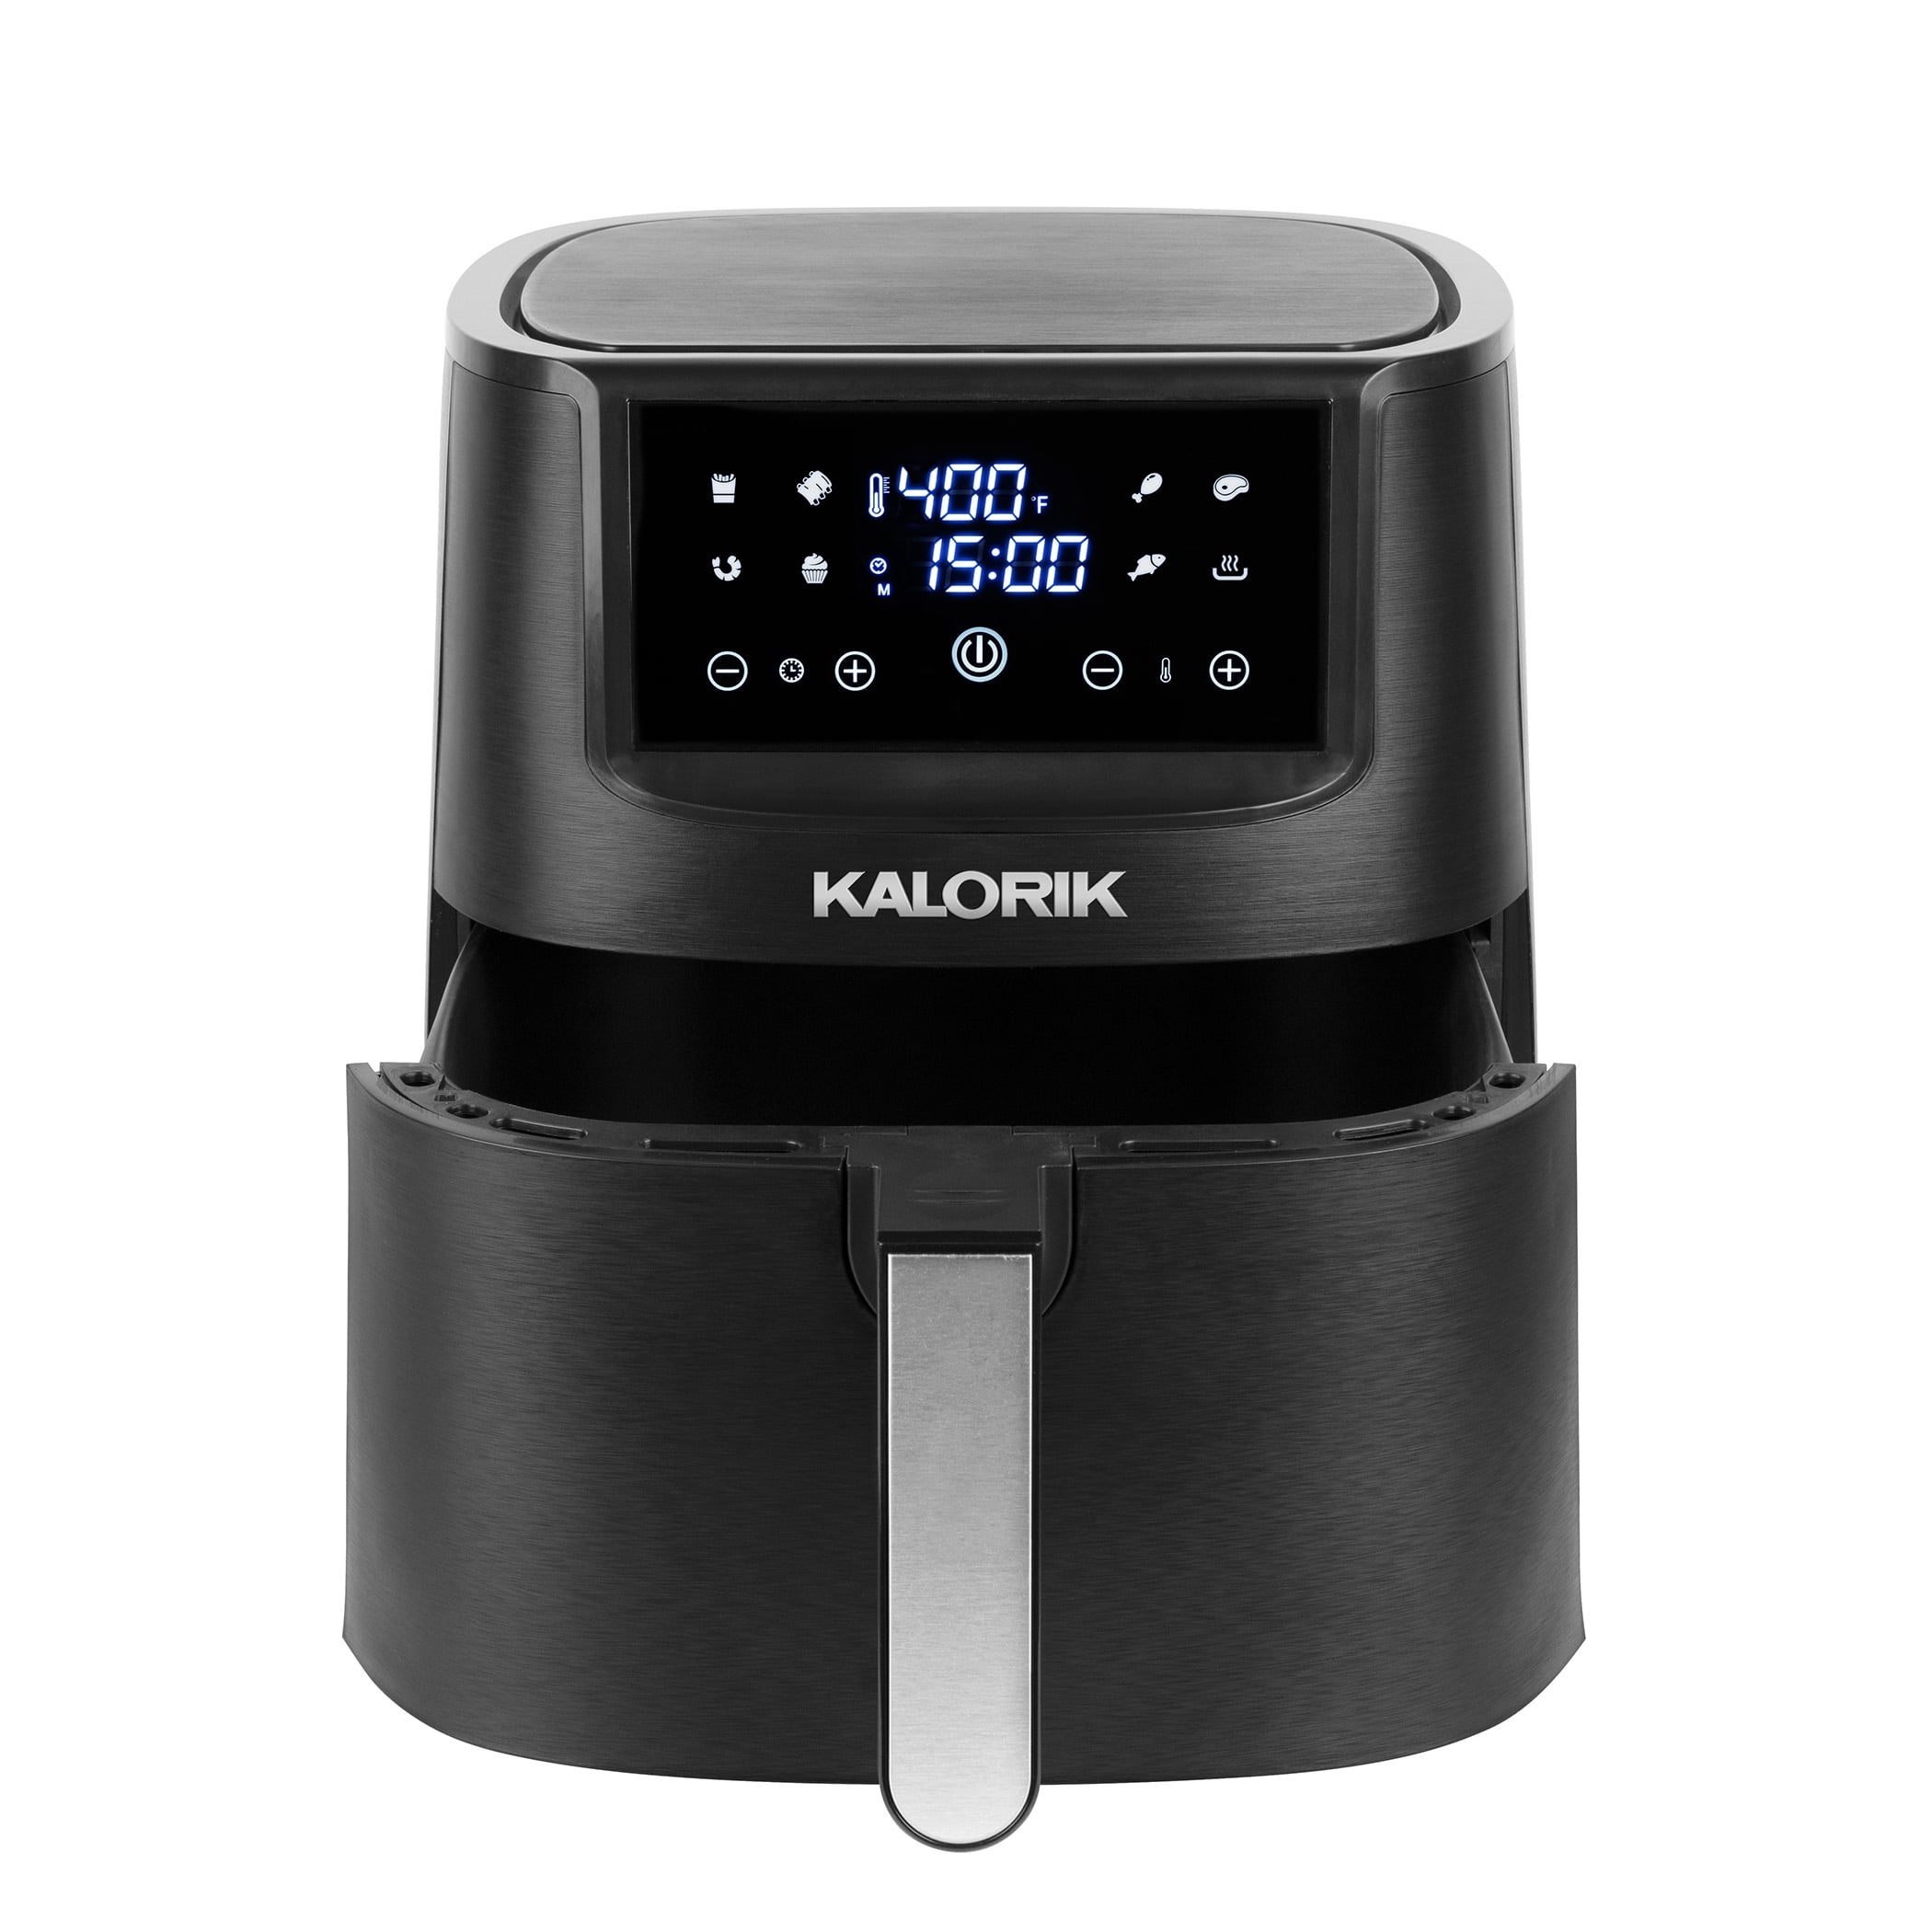 Kalorik® 3.2 Quart Touch Screen Air Fryer Black with 8 Presets, FT 47859 BK  